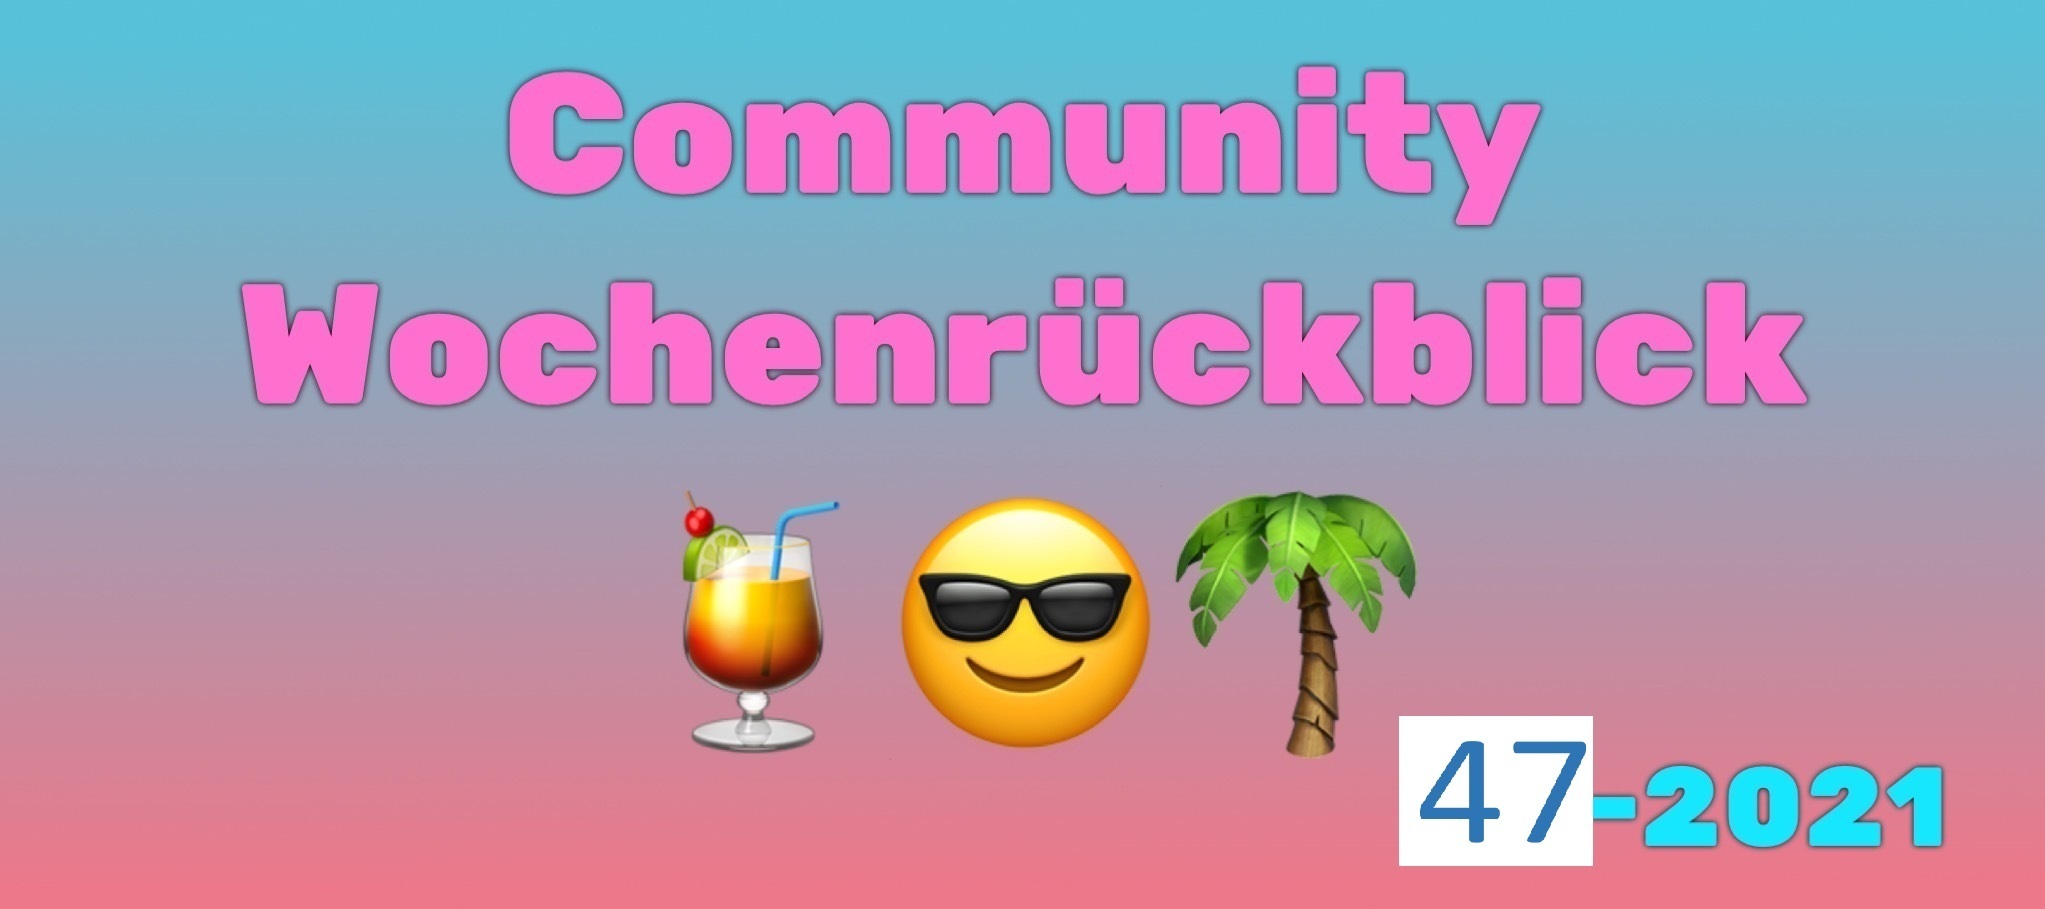 Community Wochenrückblick #47 2021